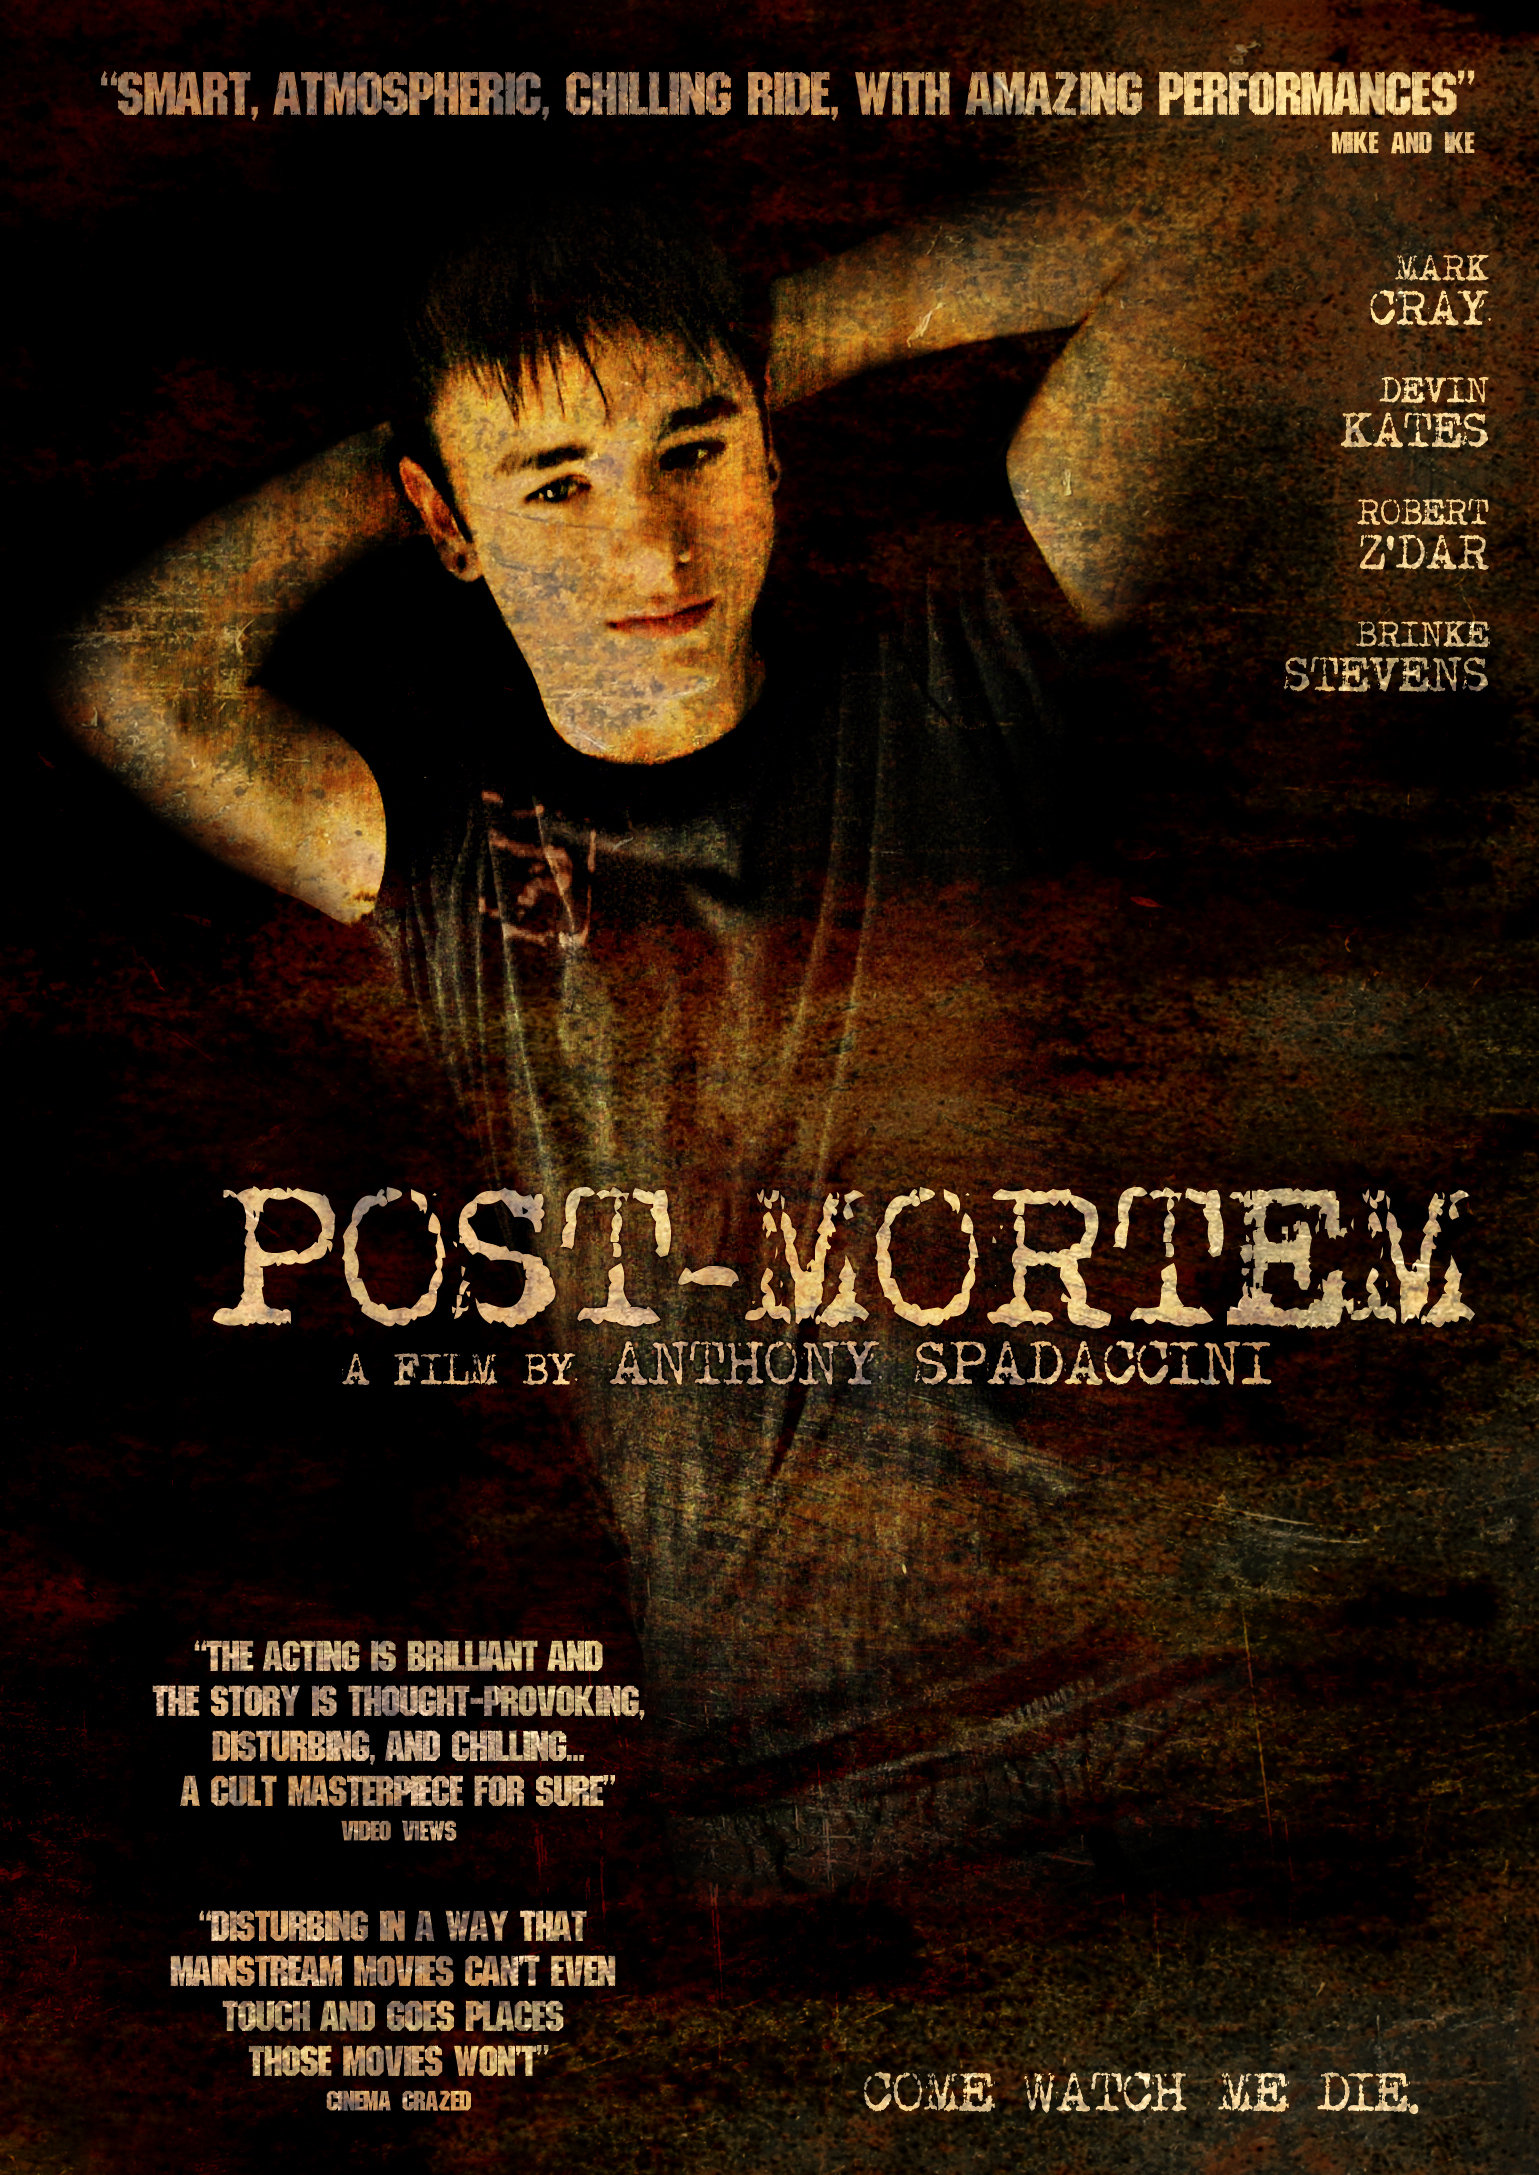 Post-Mortem (Theatrical/DVD Poster)